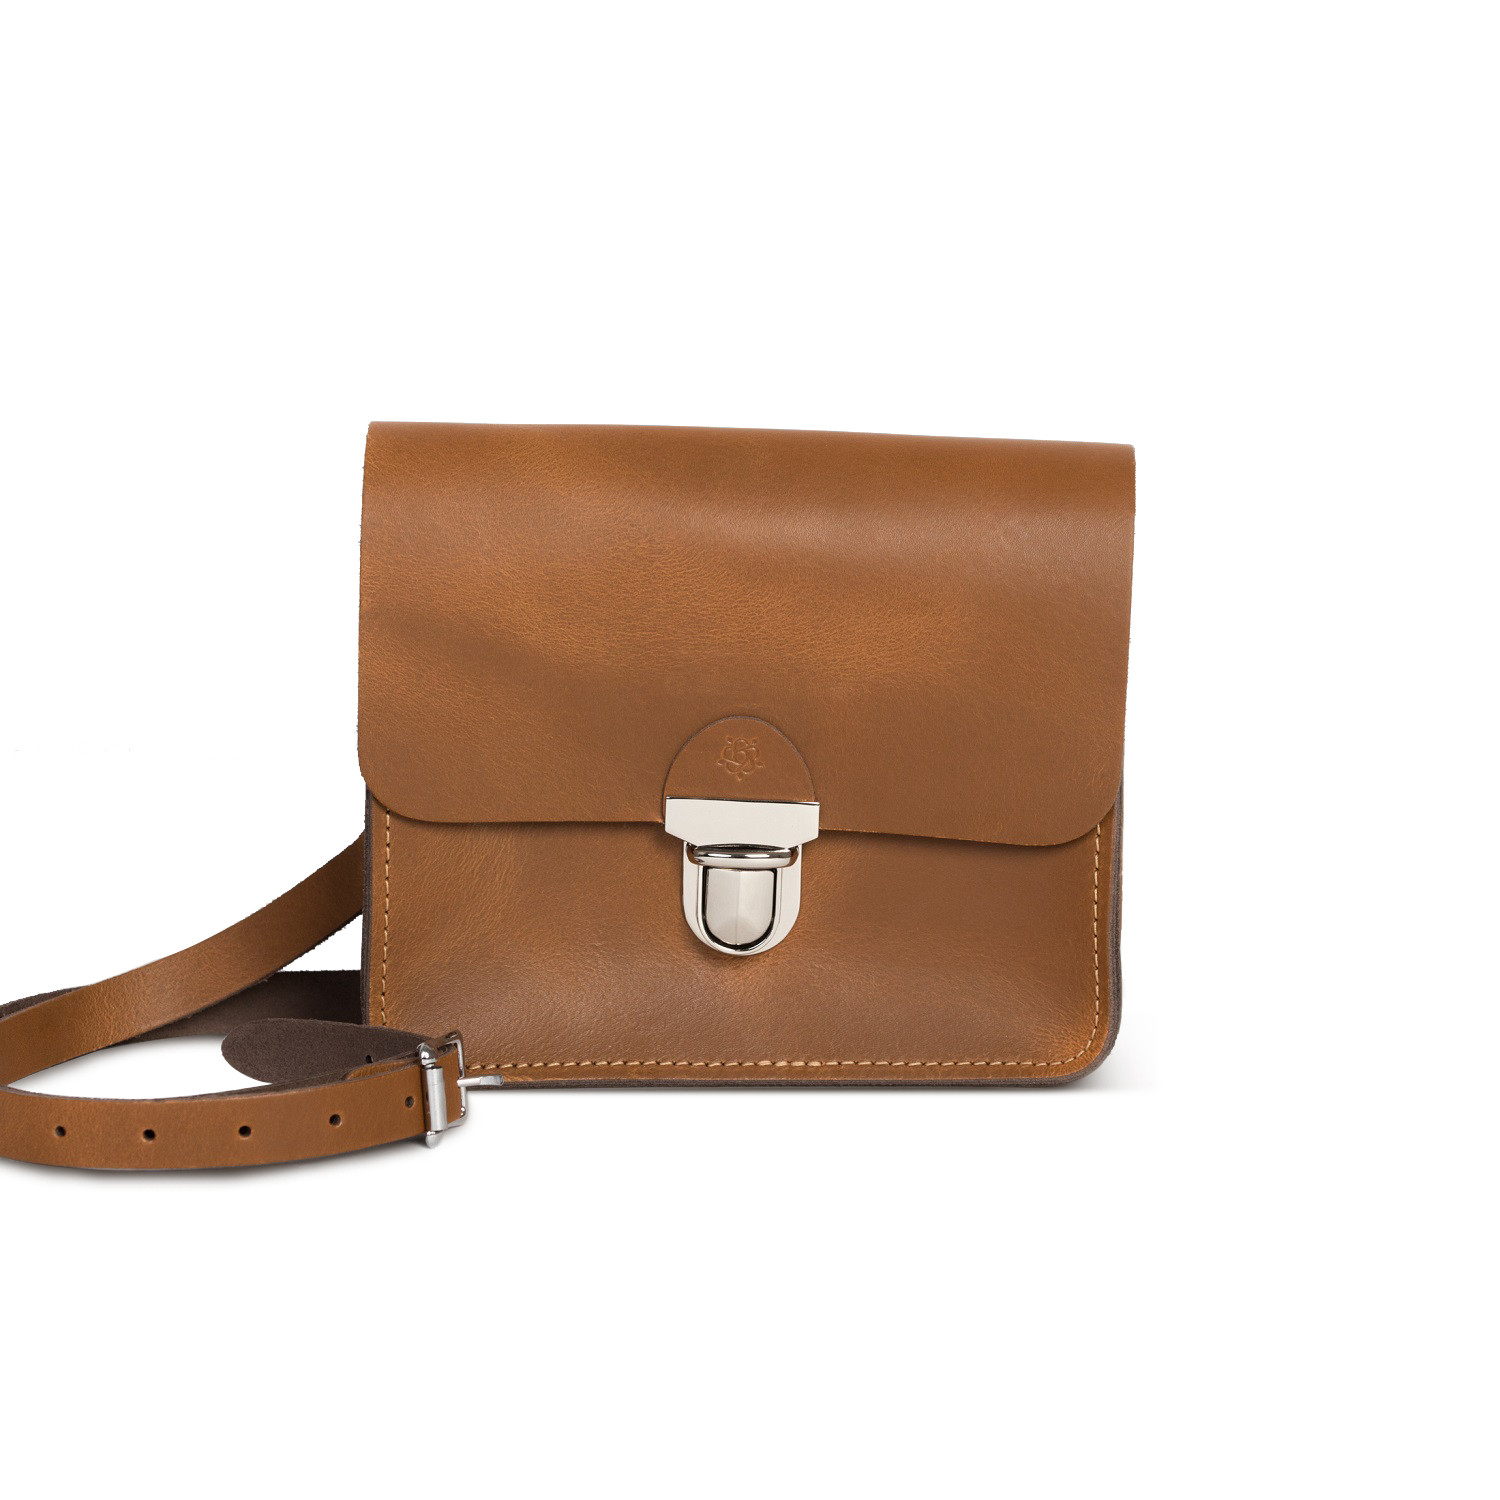 Sofia Premium Leather Crossbody Bag in Vintage Tan